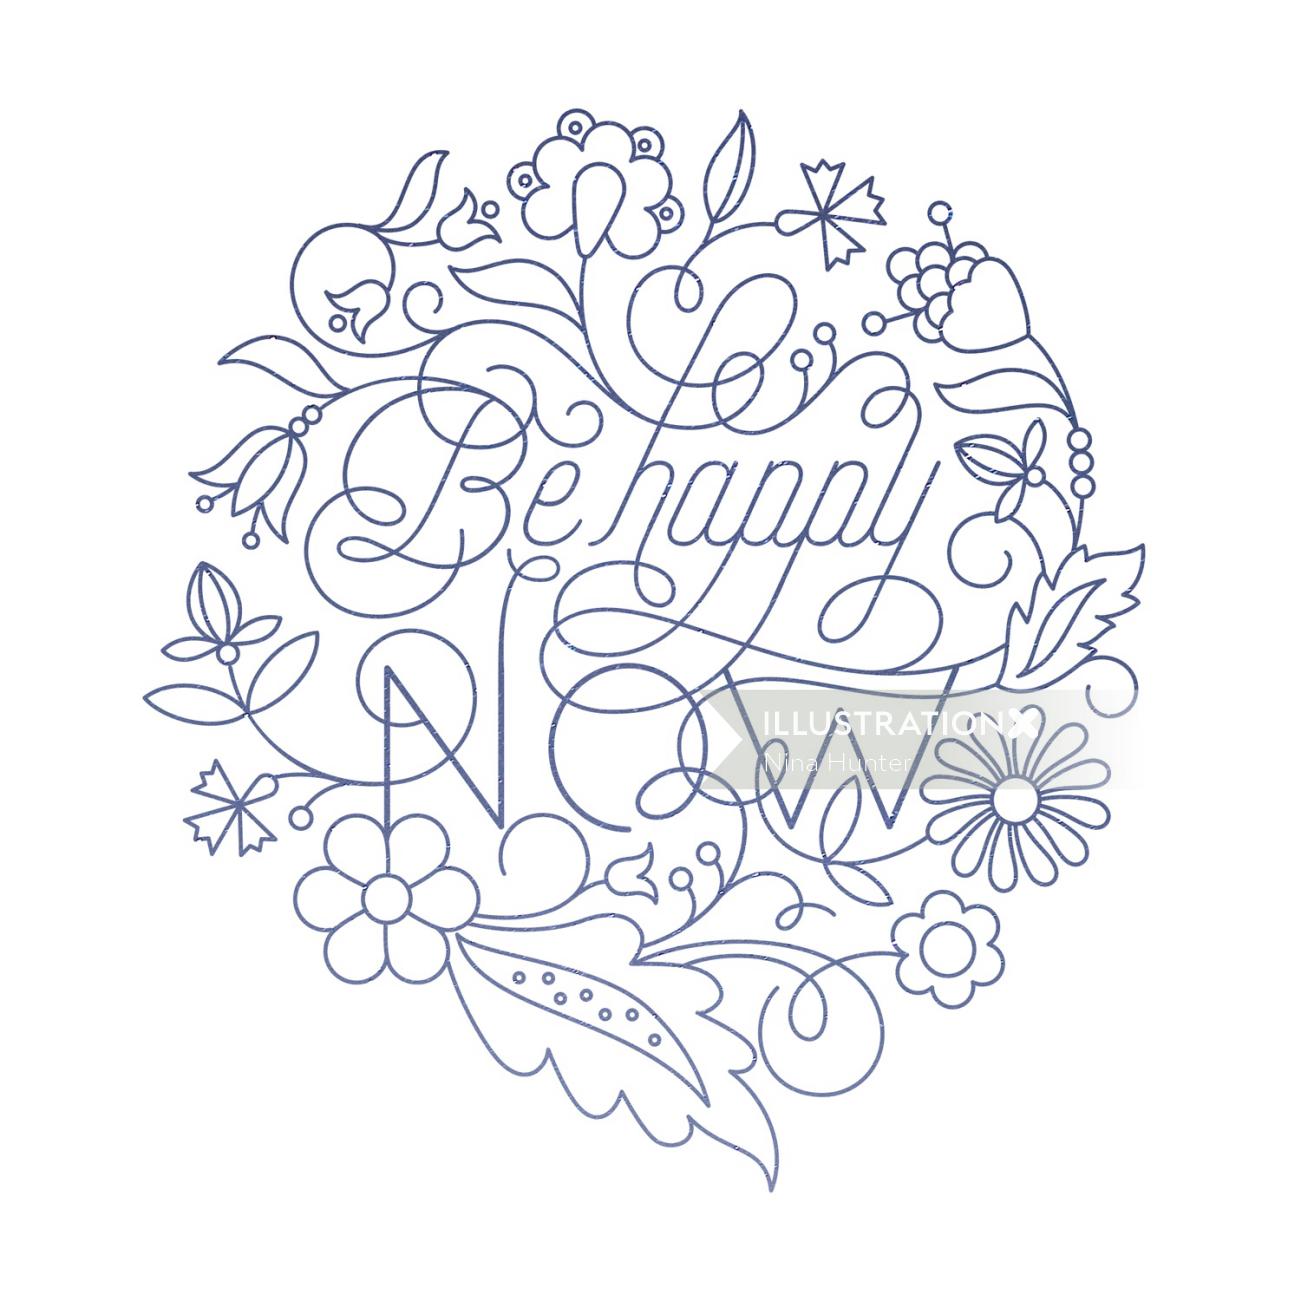 Art de la calligraphie de Be happy NOW